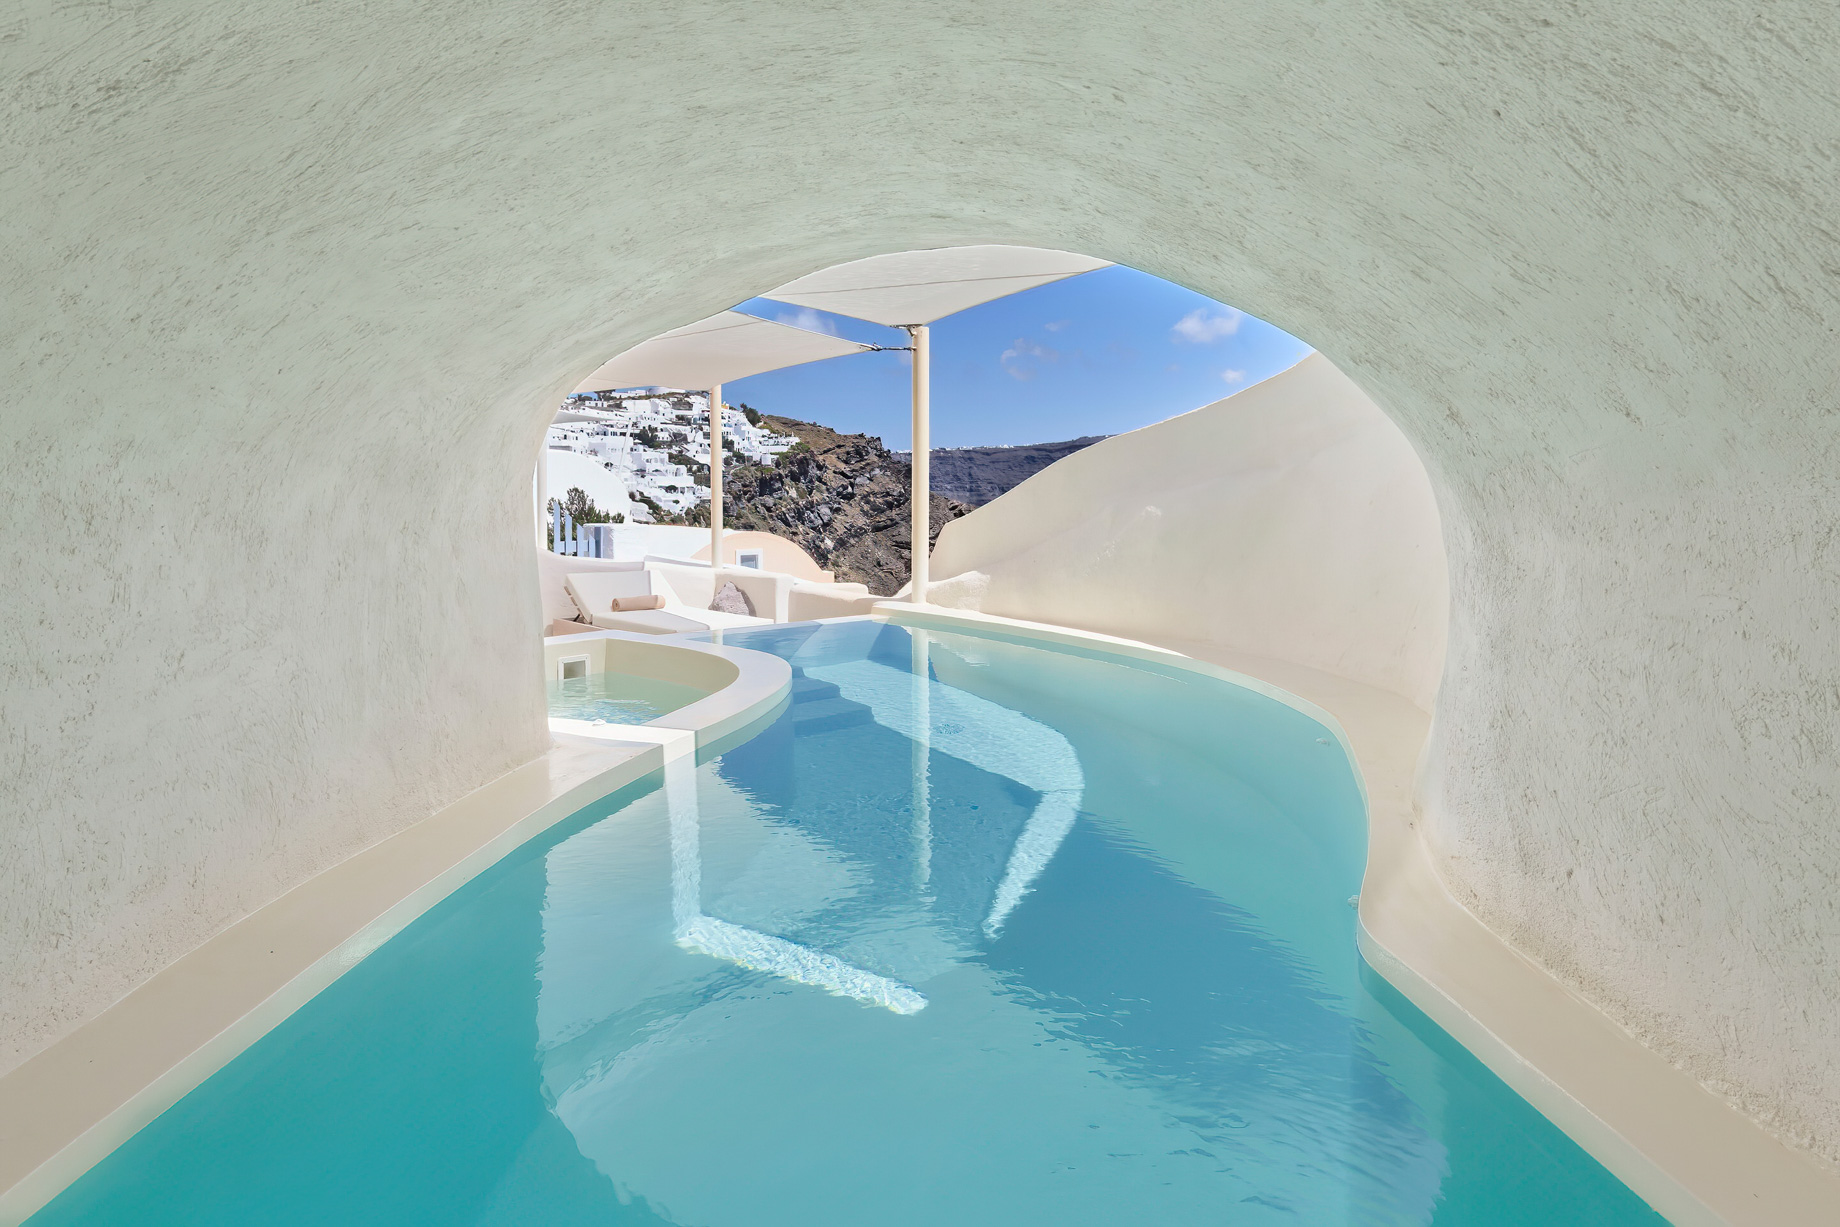 Mystique Hotel Santorini – Oia, Santorini Island, Greece – Mystery Villa in Room Swim Out Pool